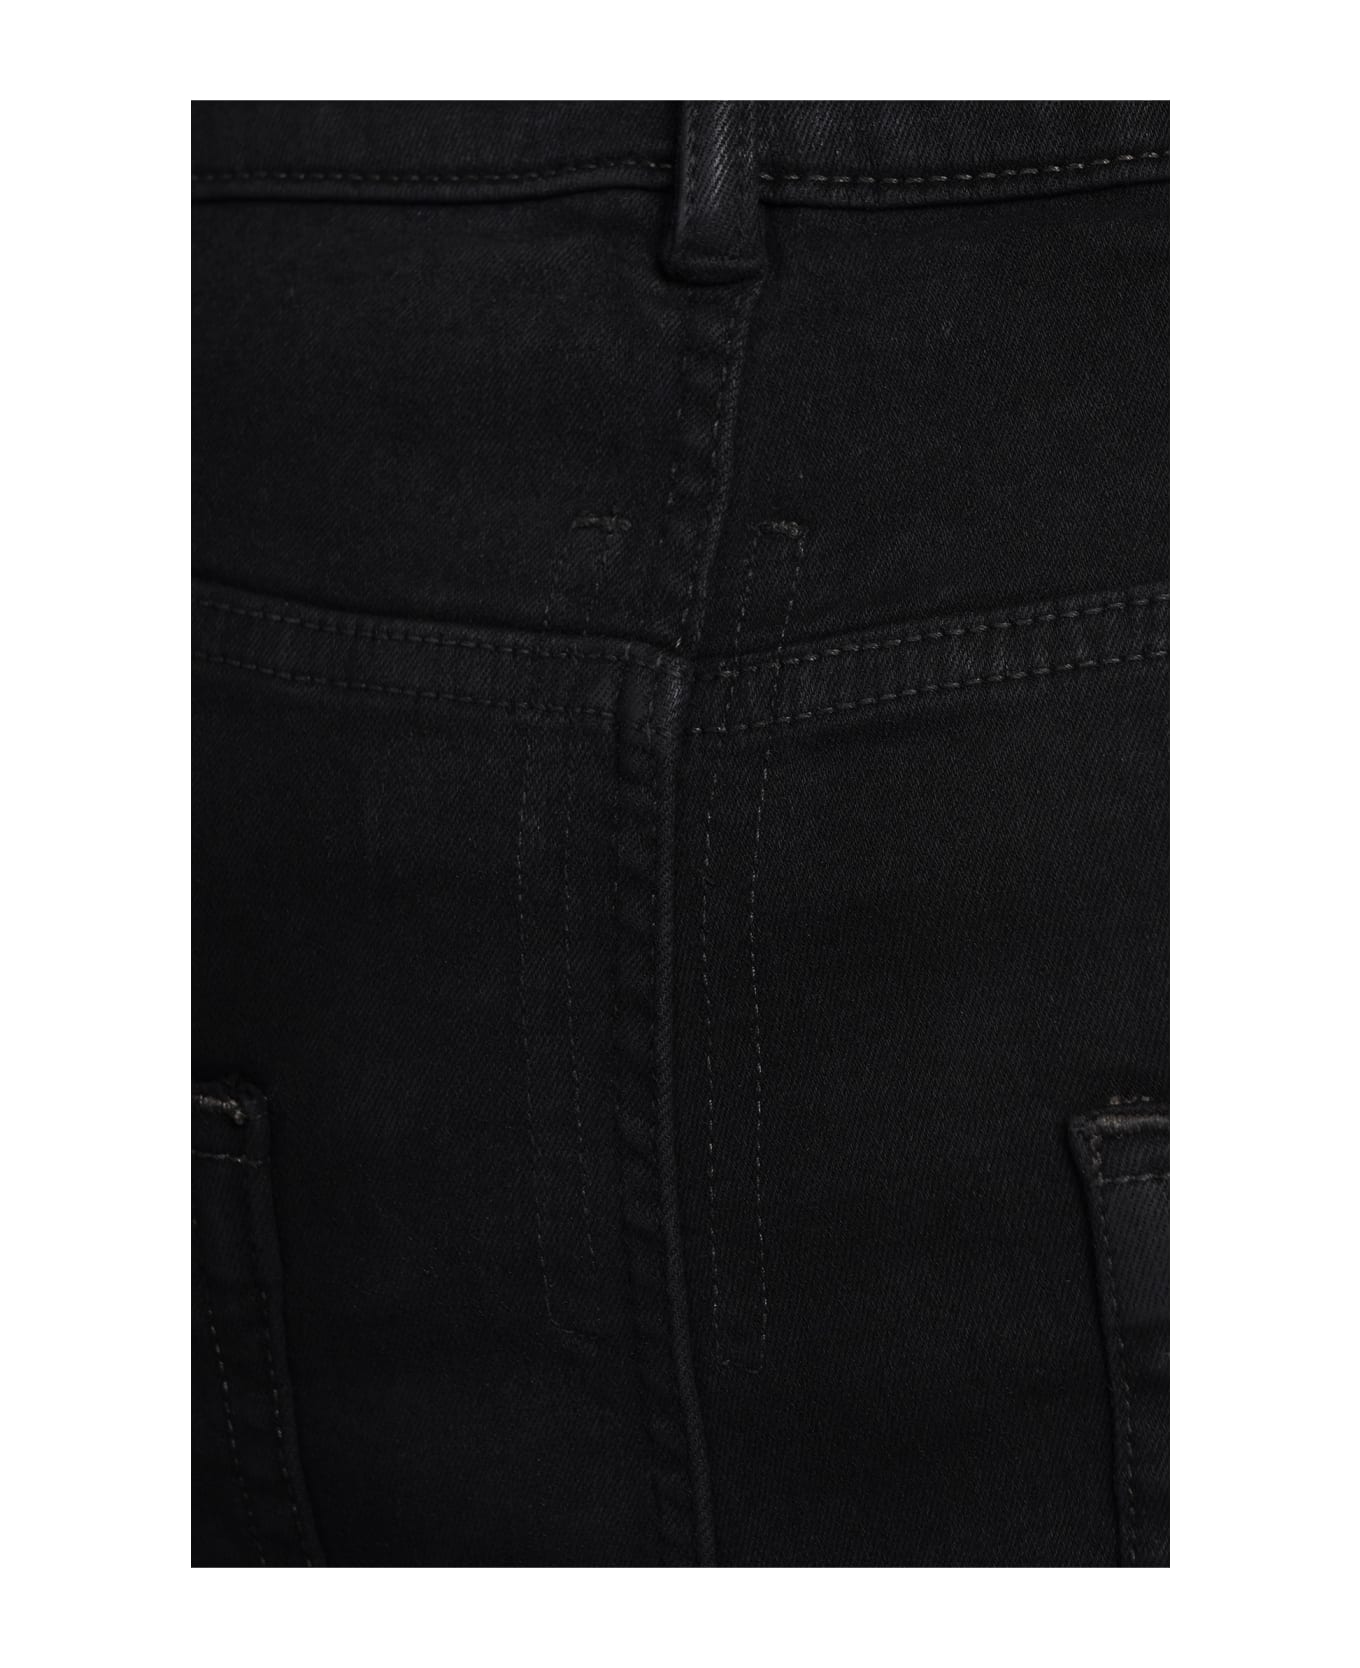 DRKSHDW Detroit Cut Jeans In Black Cotton - Nero